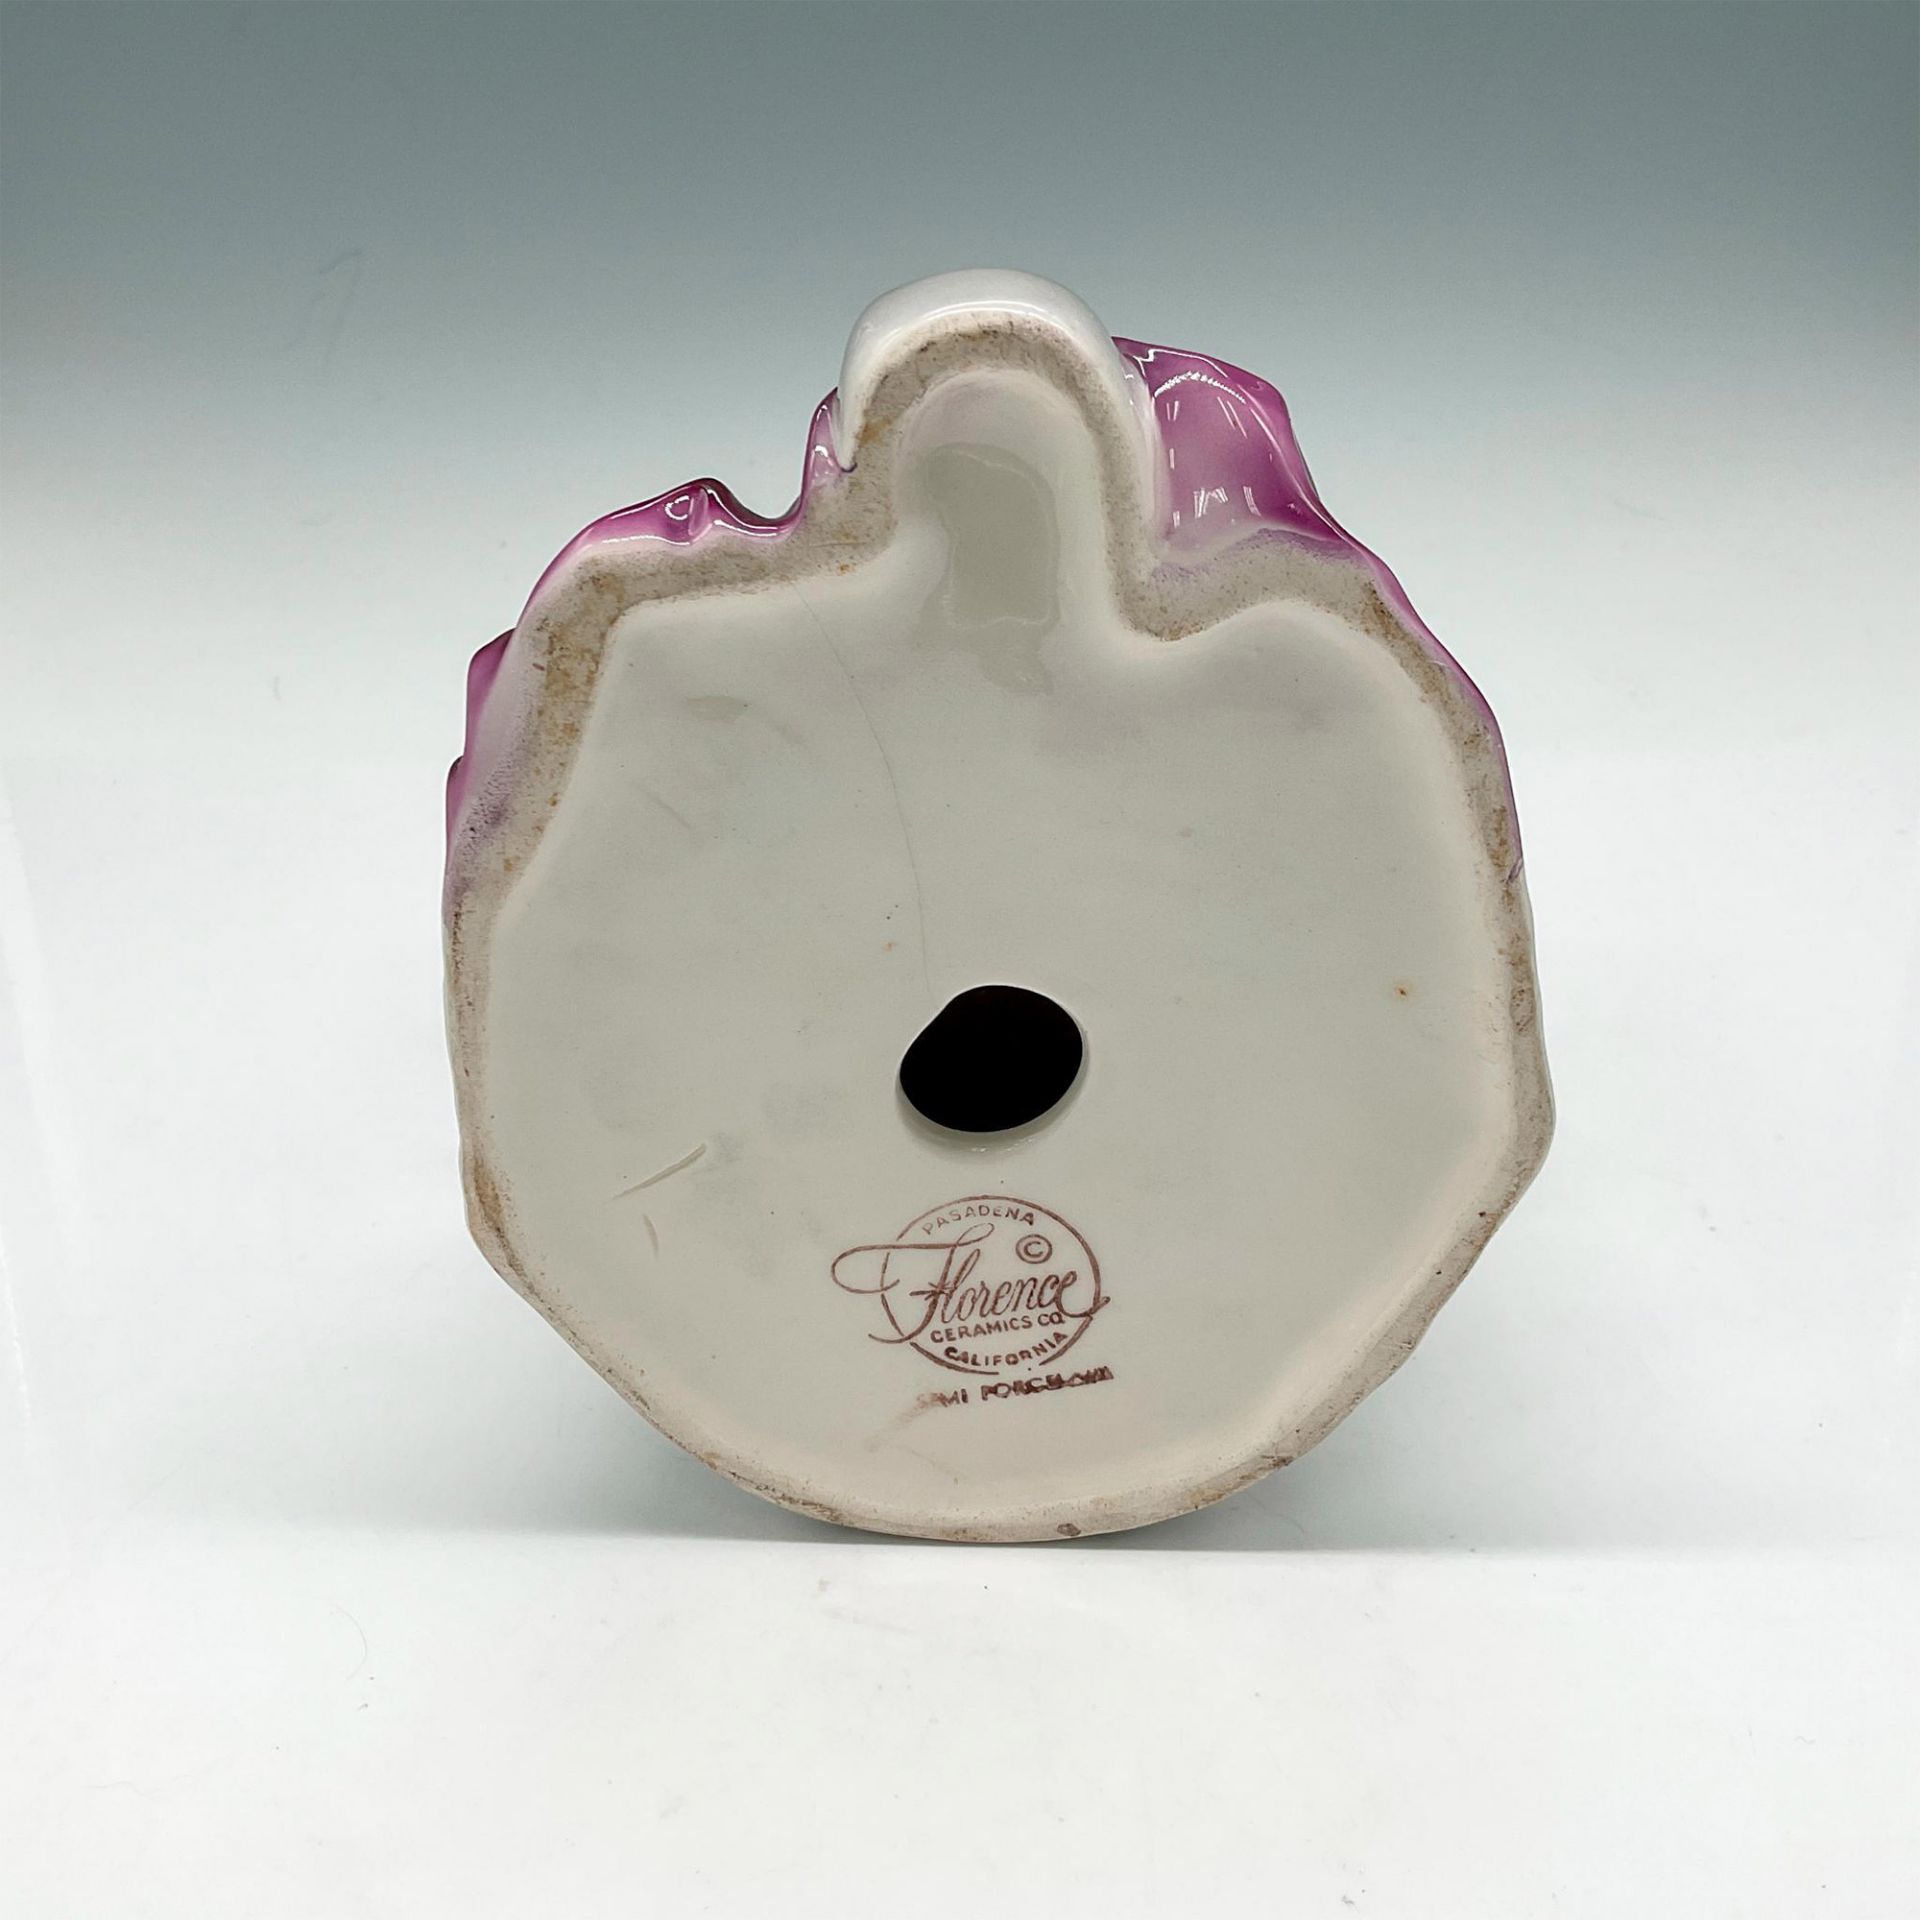 Florence Ceramics Porcelain Figurine, Memories - Image 3 of 3